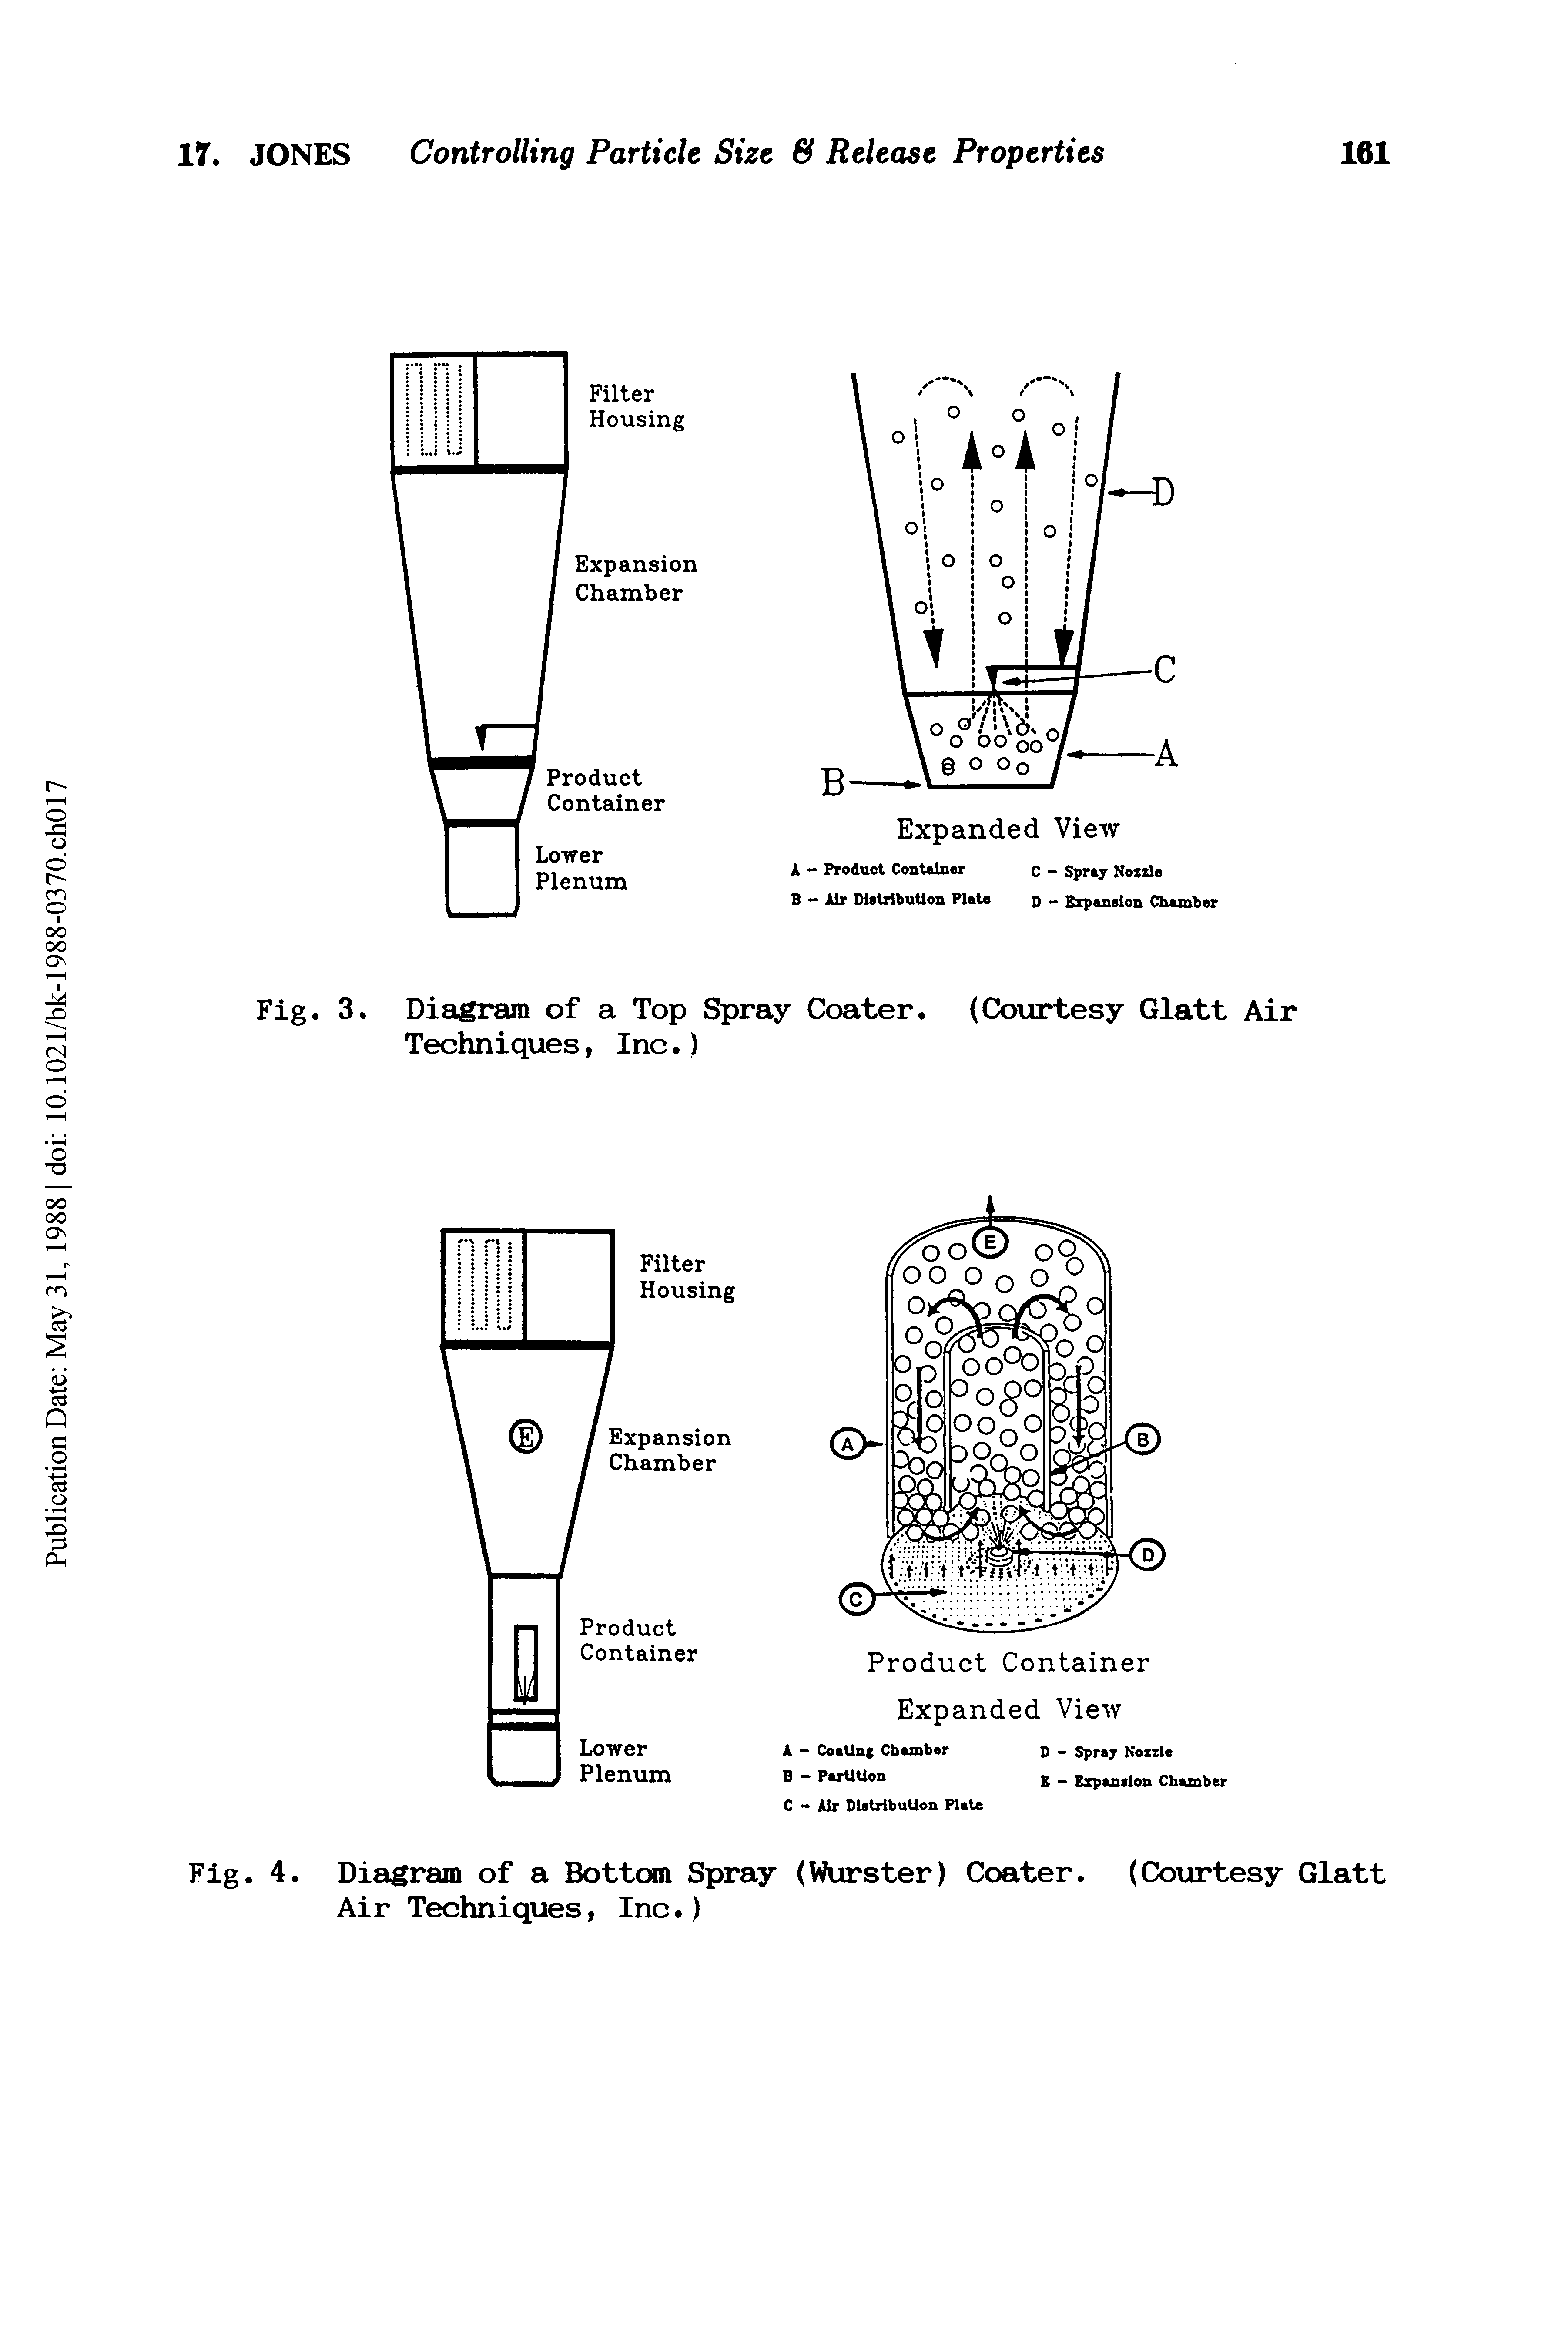 Fig. 4. Diagram of a Bottom Spray (Wurster) Coater. (Courtesy Glatt Air Techniques, Inc.)...